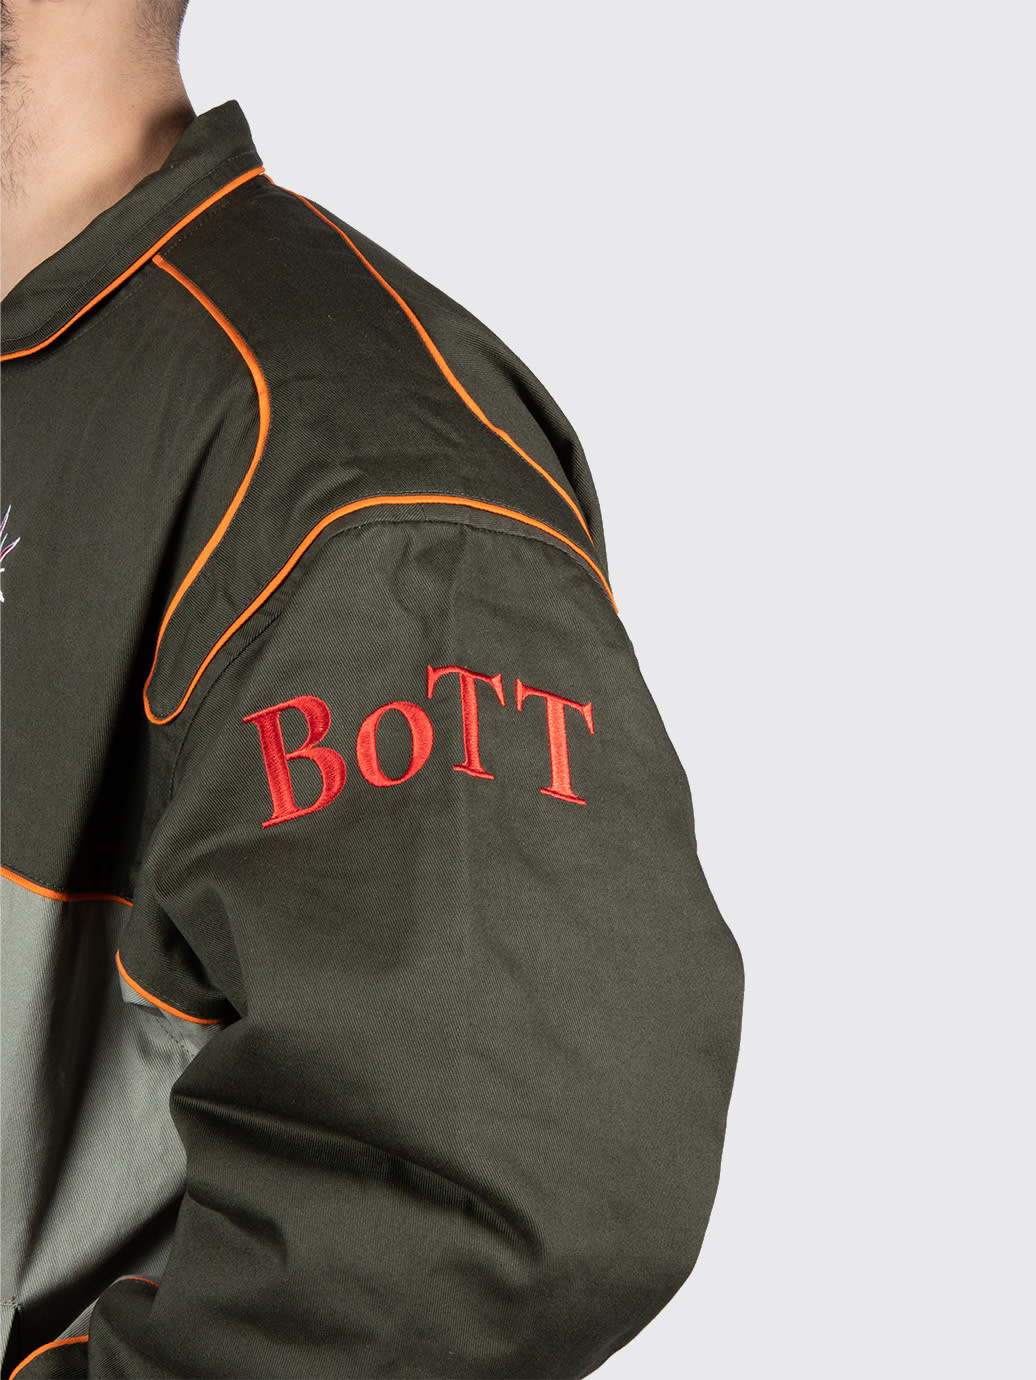 bott Cotton Racing Jacket L size-